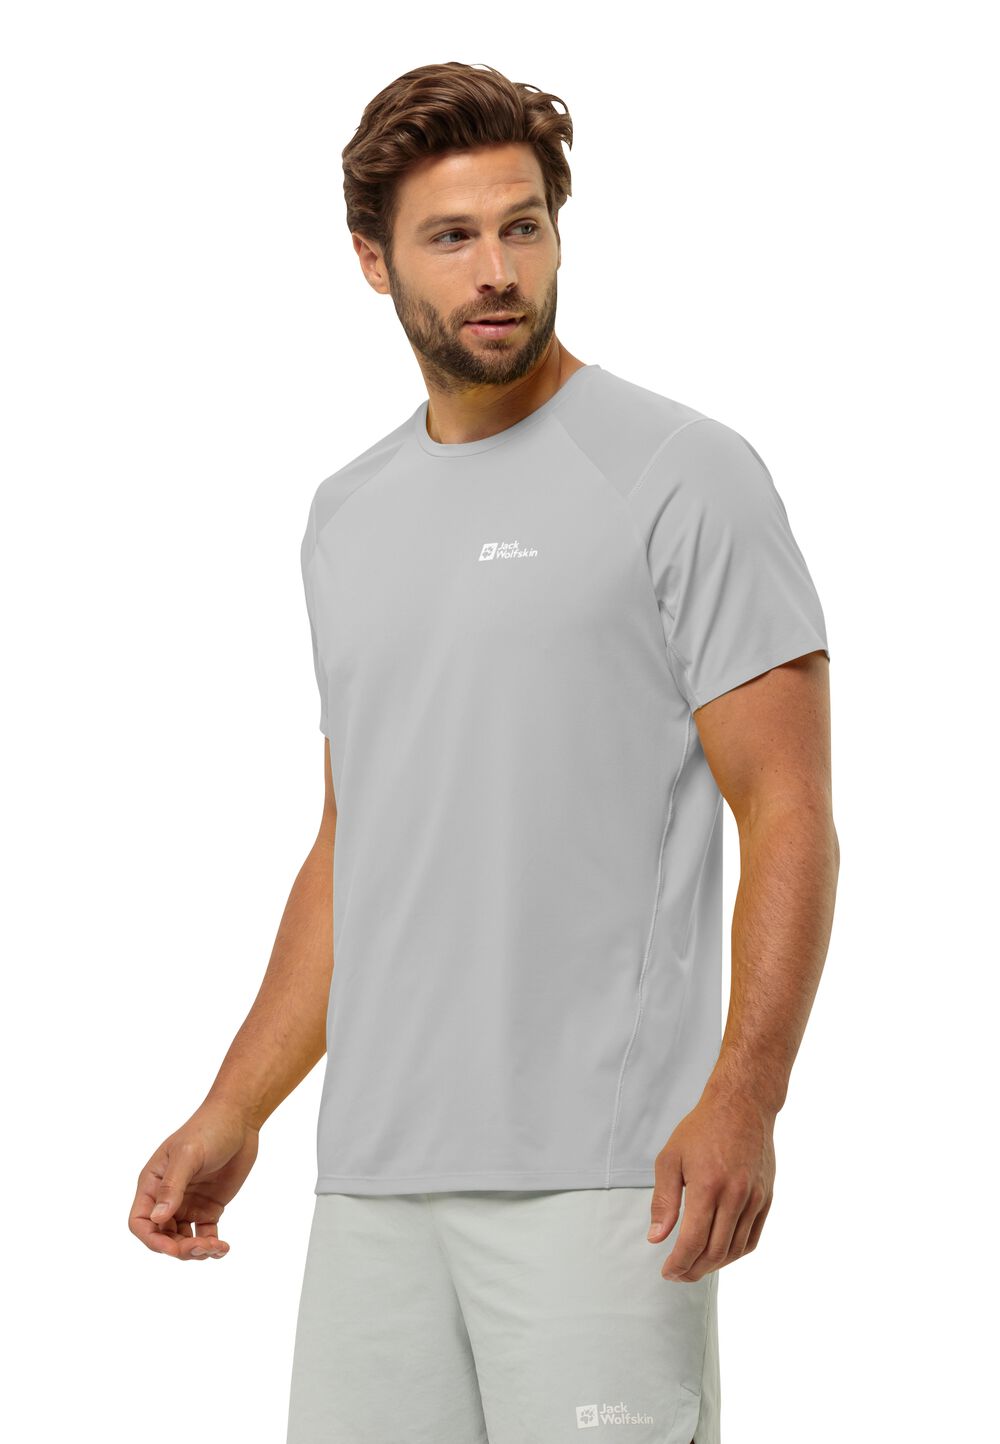 Jack Wolfskin Prelight Chill T-Shirt Men Functioneel shirt Heren M grijs cool grey